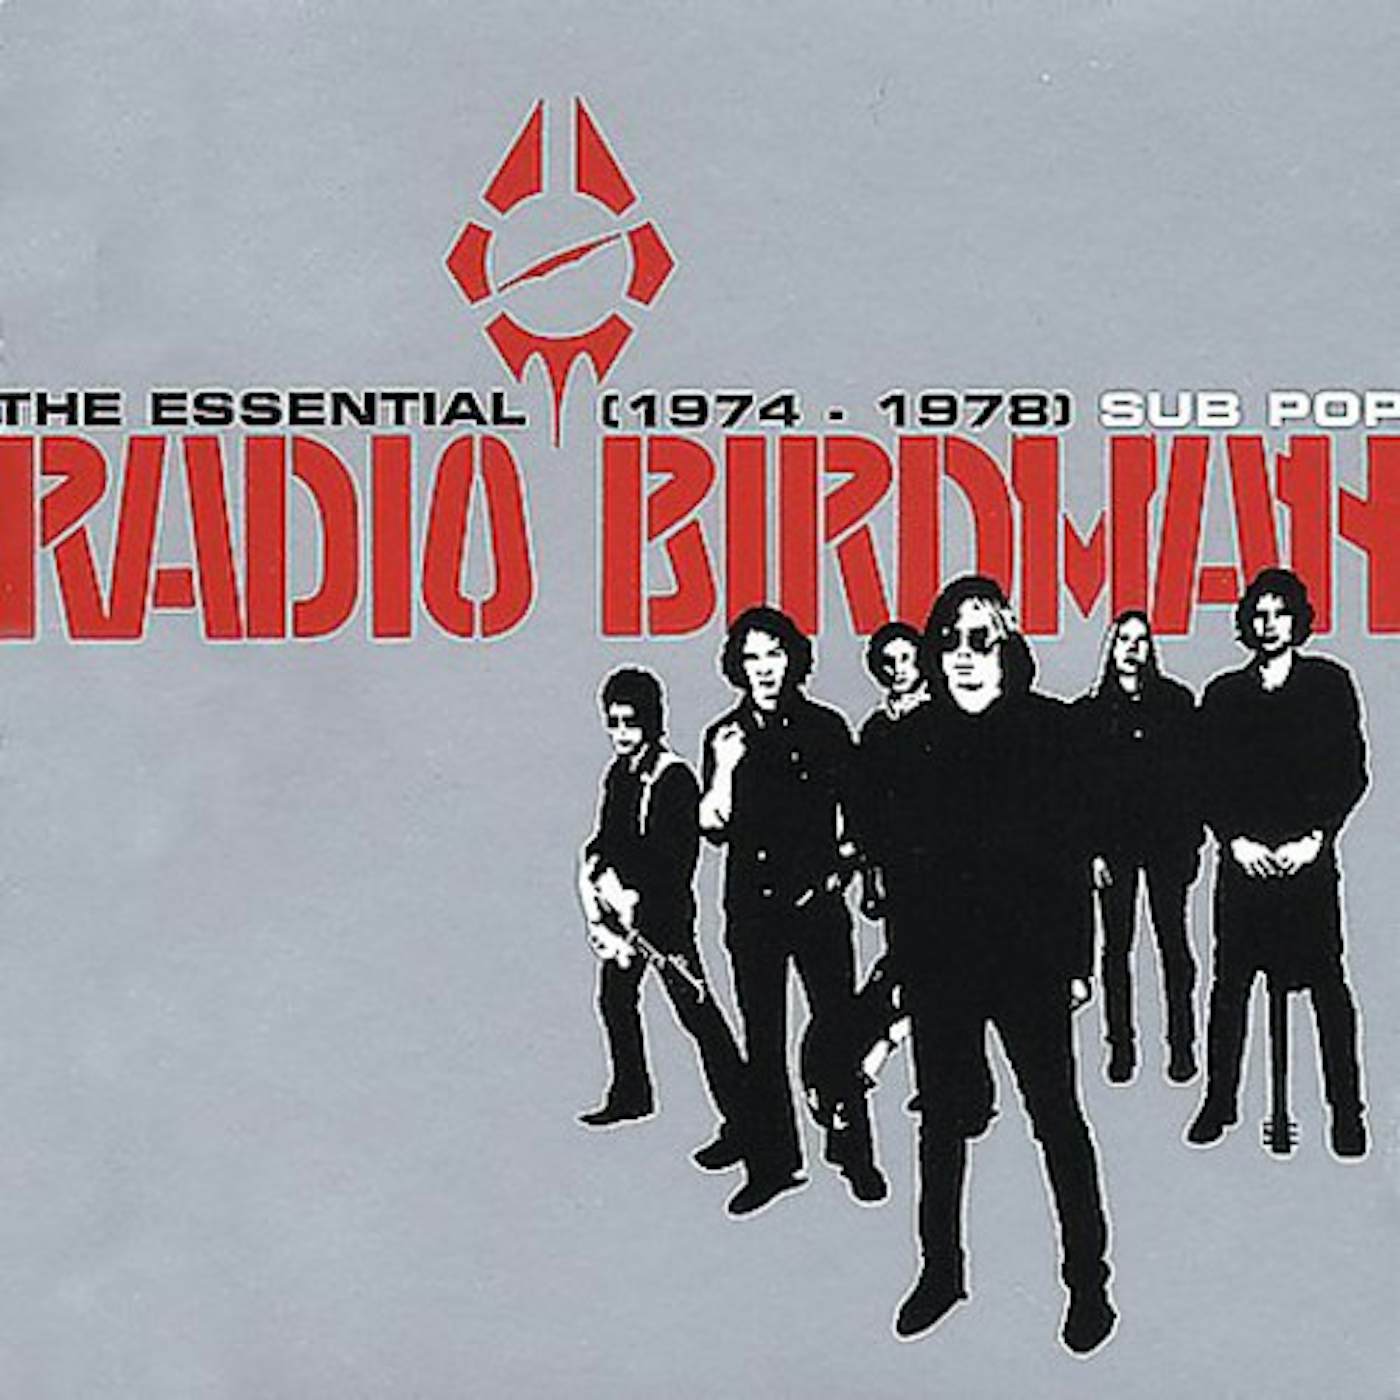 Essential Radio Birdman 1974-1978 Vinyl Record